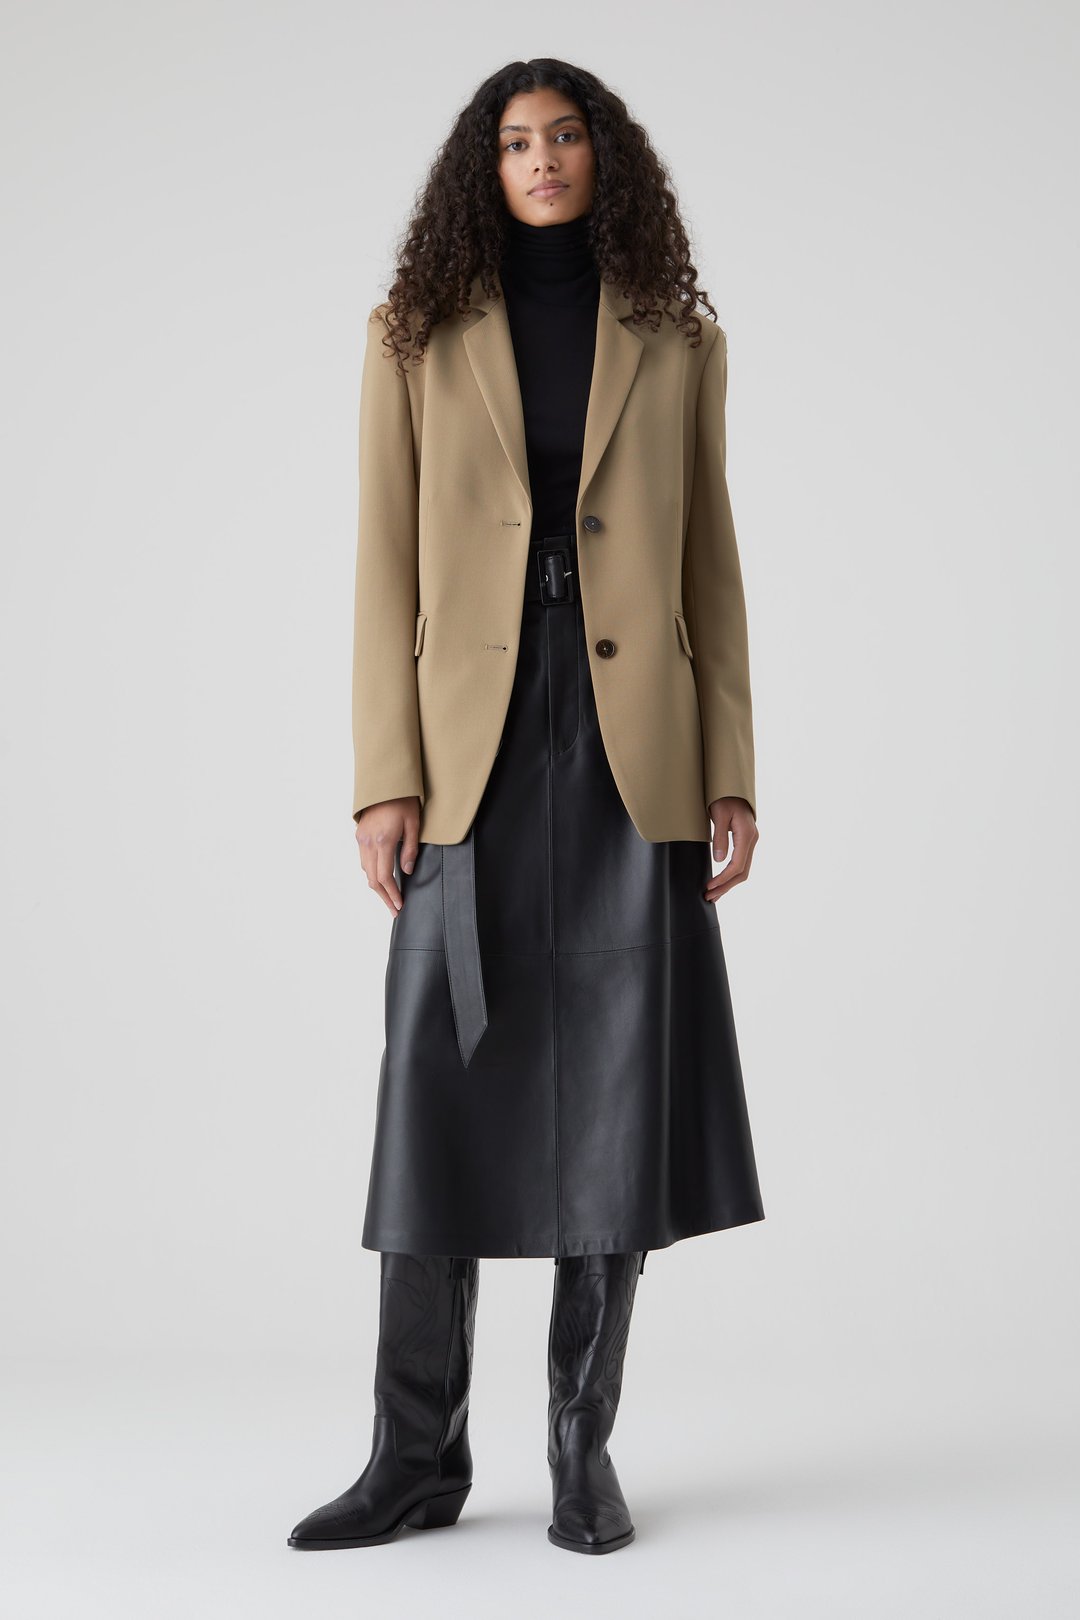 discount 79% Black M Made in Italy Long coat WOMEN FASHION Coats Elegant 